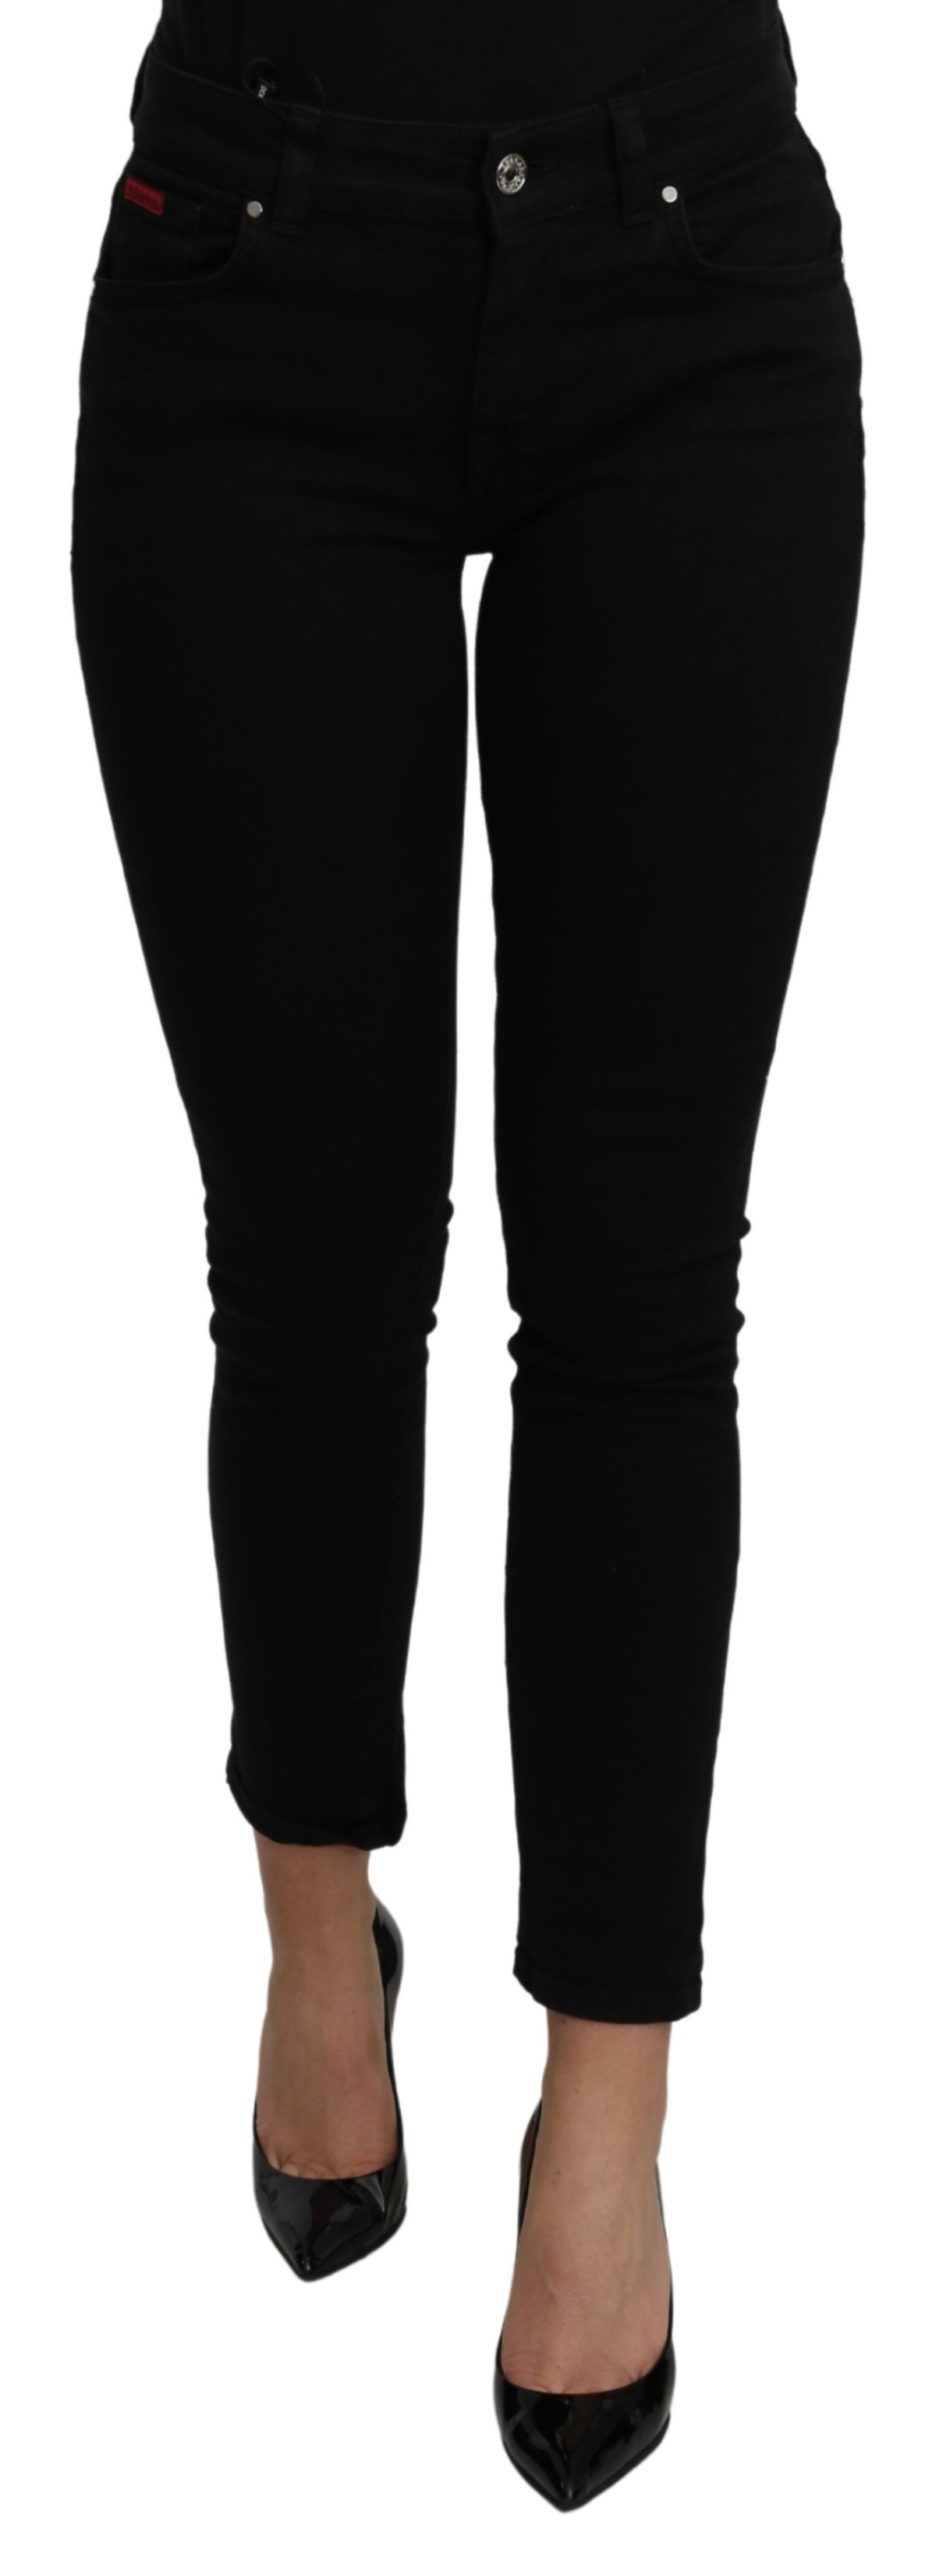 Dolce & Gabbana Women's Mid Waist Slim Cotton Jeans Black PAN71117 - IT38|XS